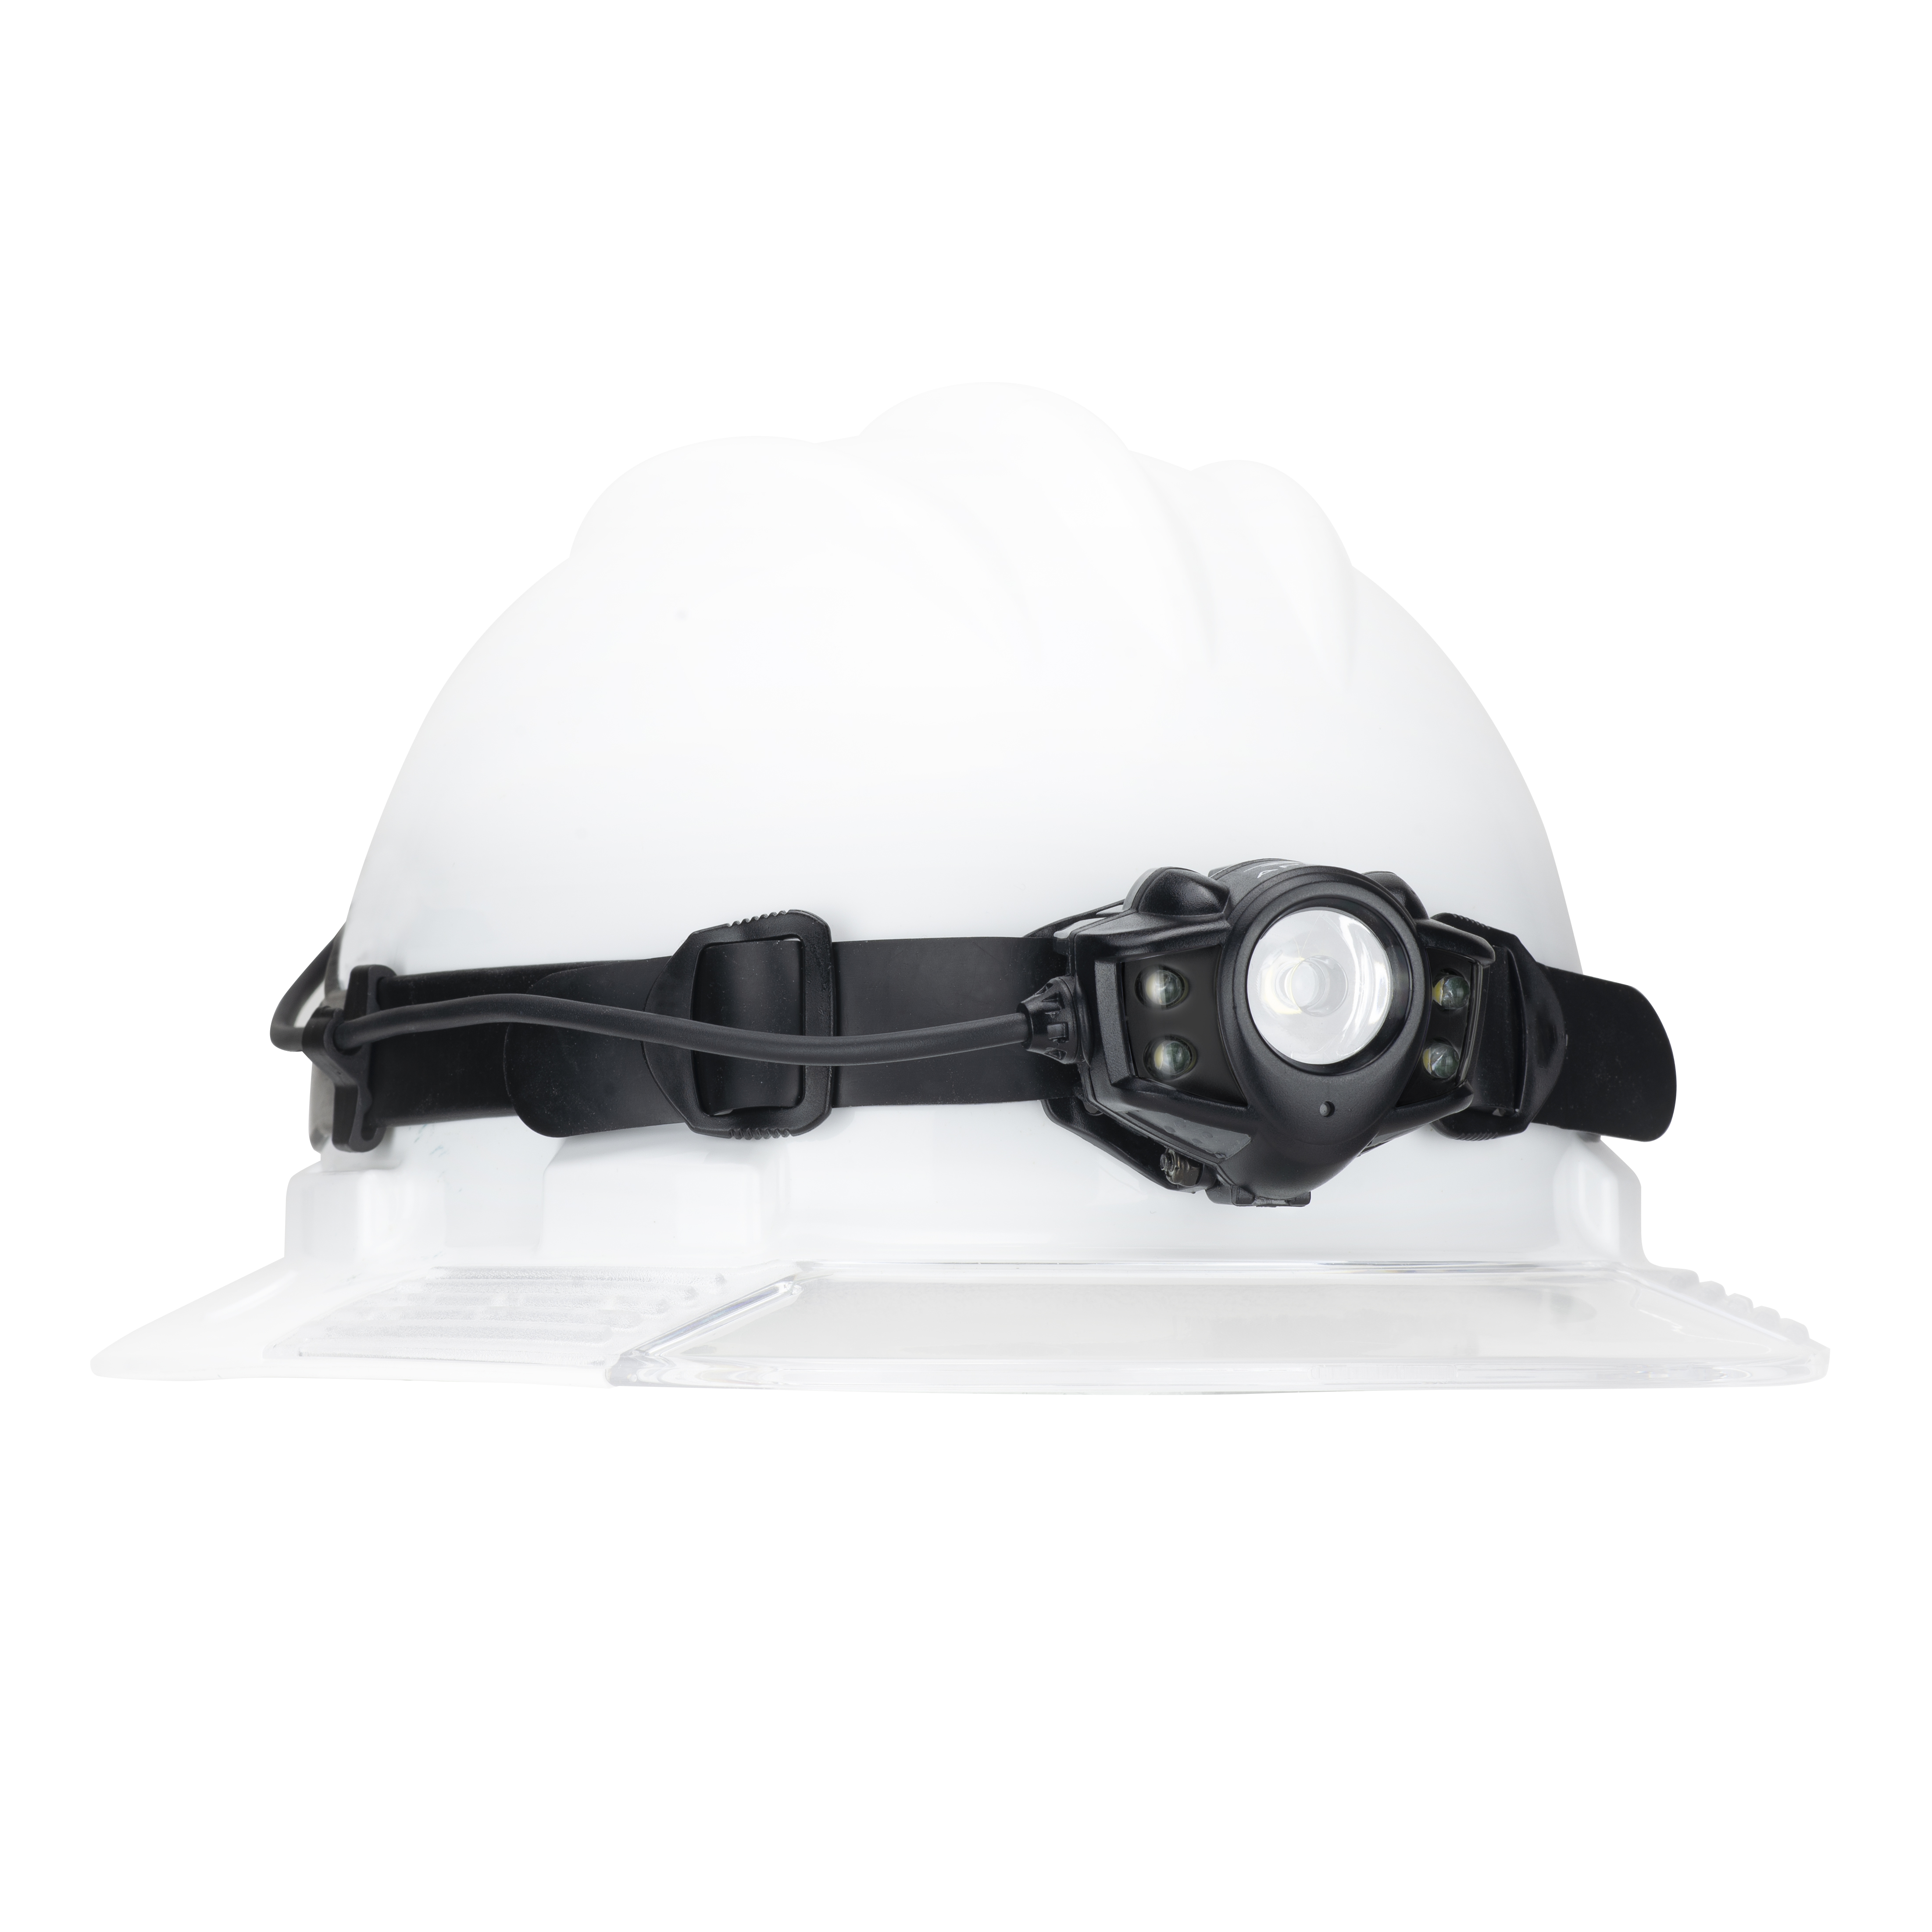 HEADLAMP, 550 LUMENS APEX RECHARGEABLE, BLACK/DA - Professional Series Headlamps